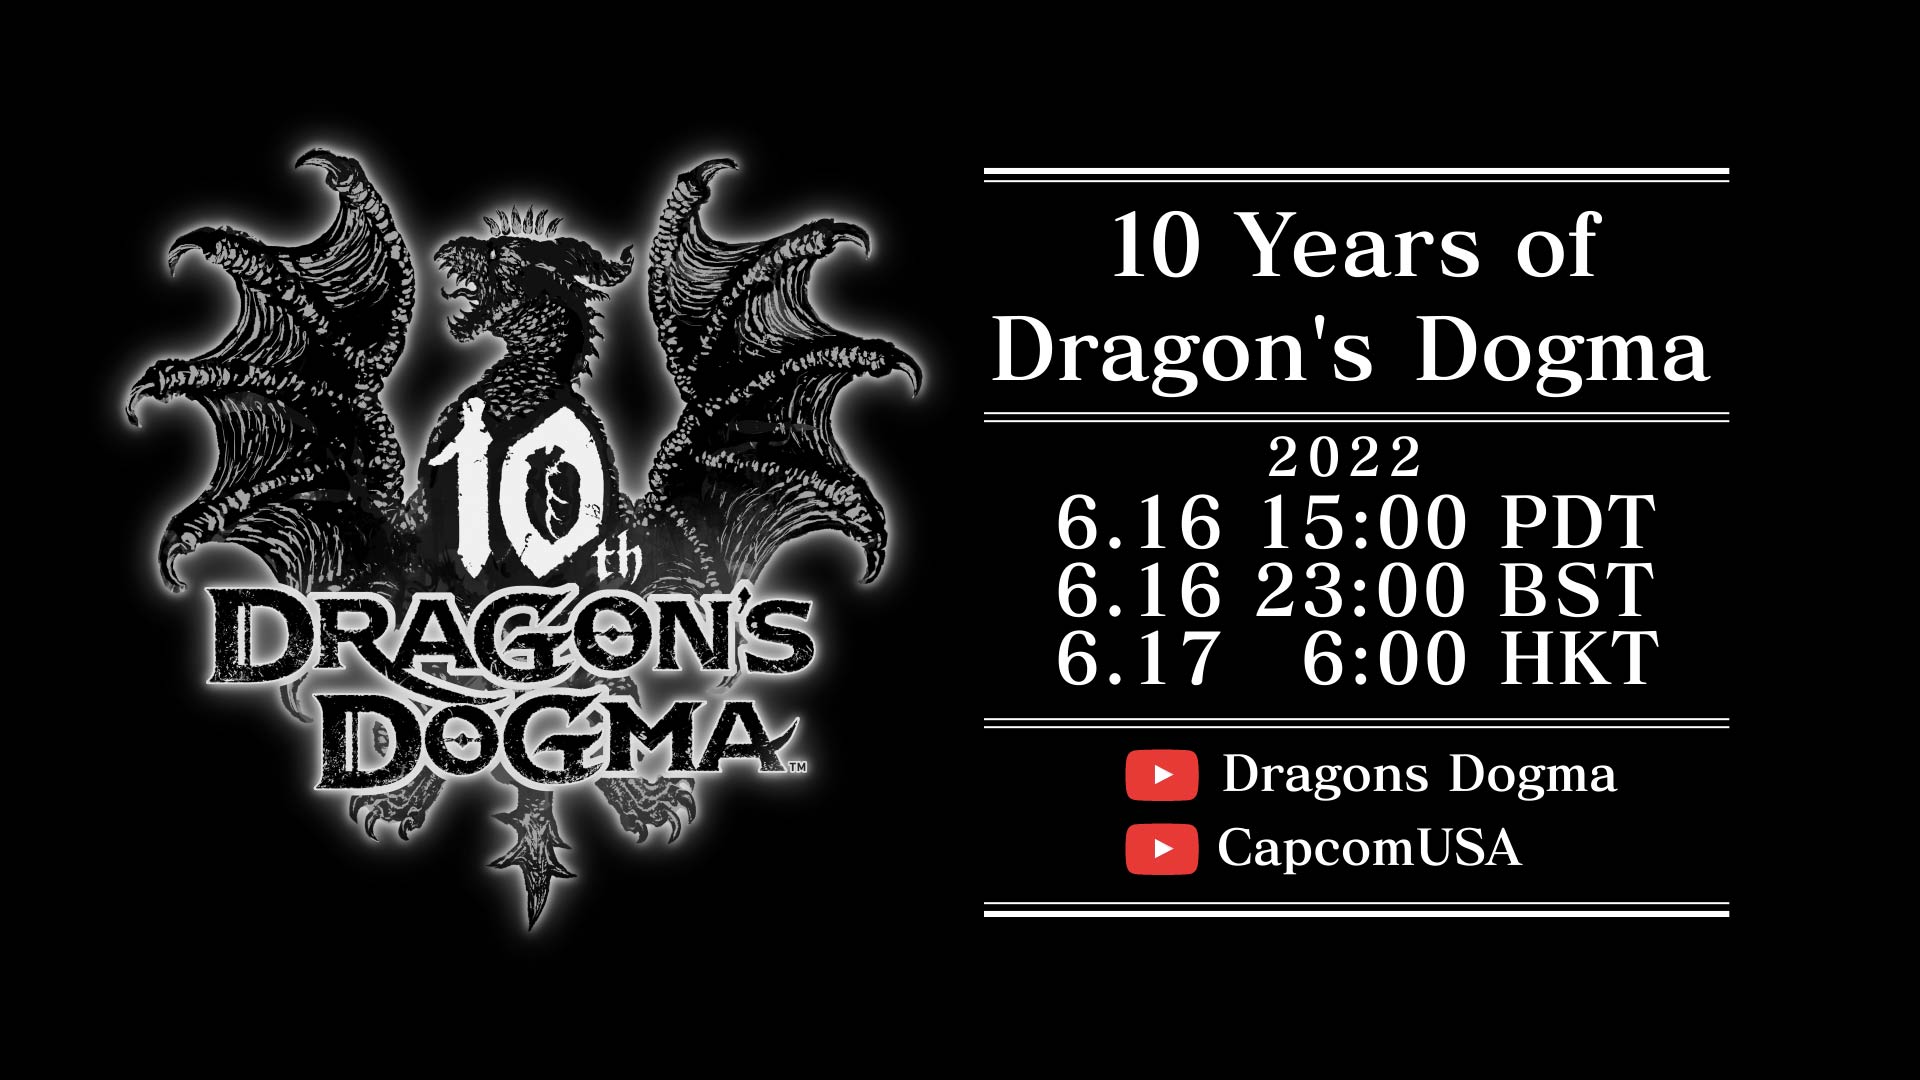 Let's play Dragon's Dogma: Dragon Arisen - #1 - Rage quit logo no começo? 